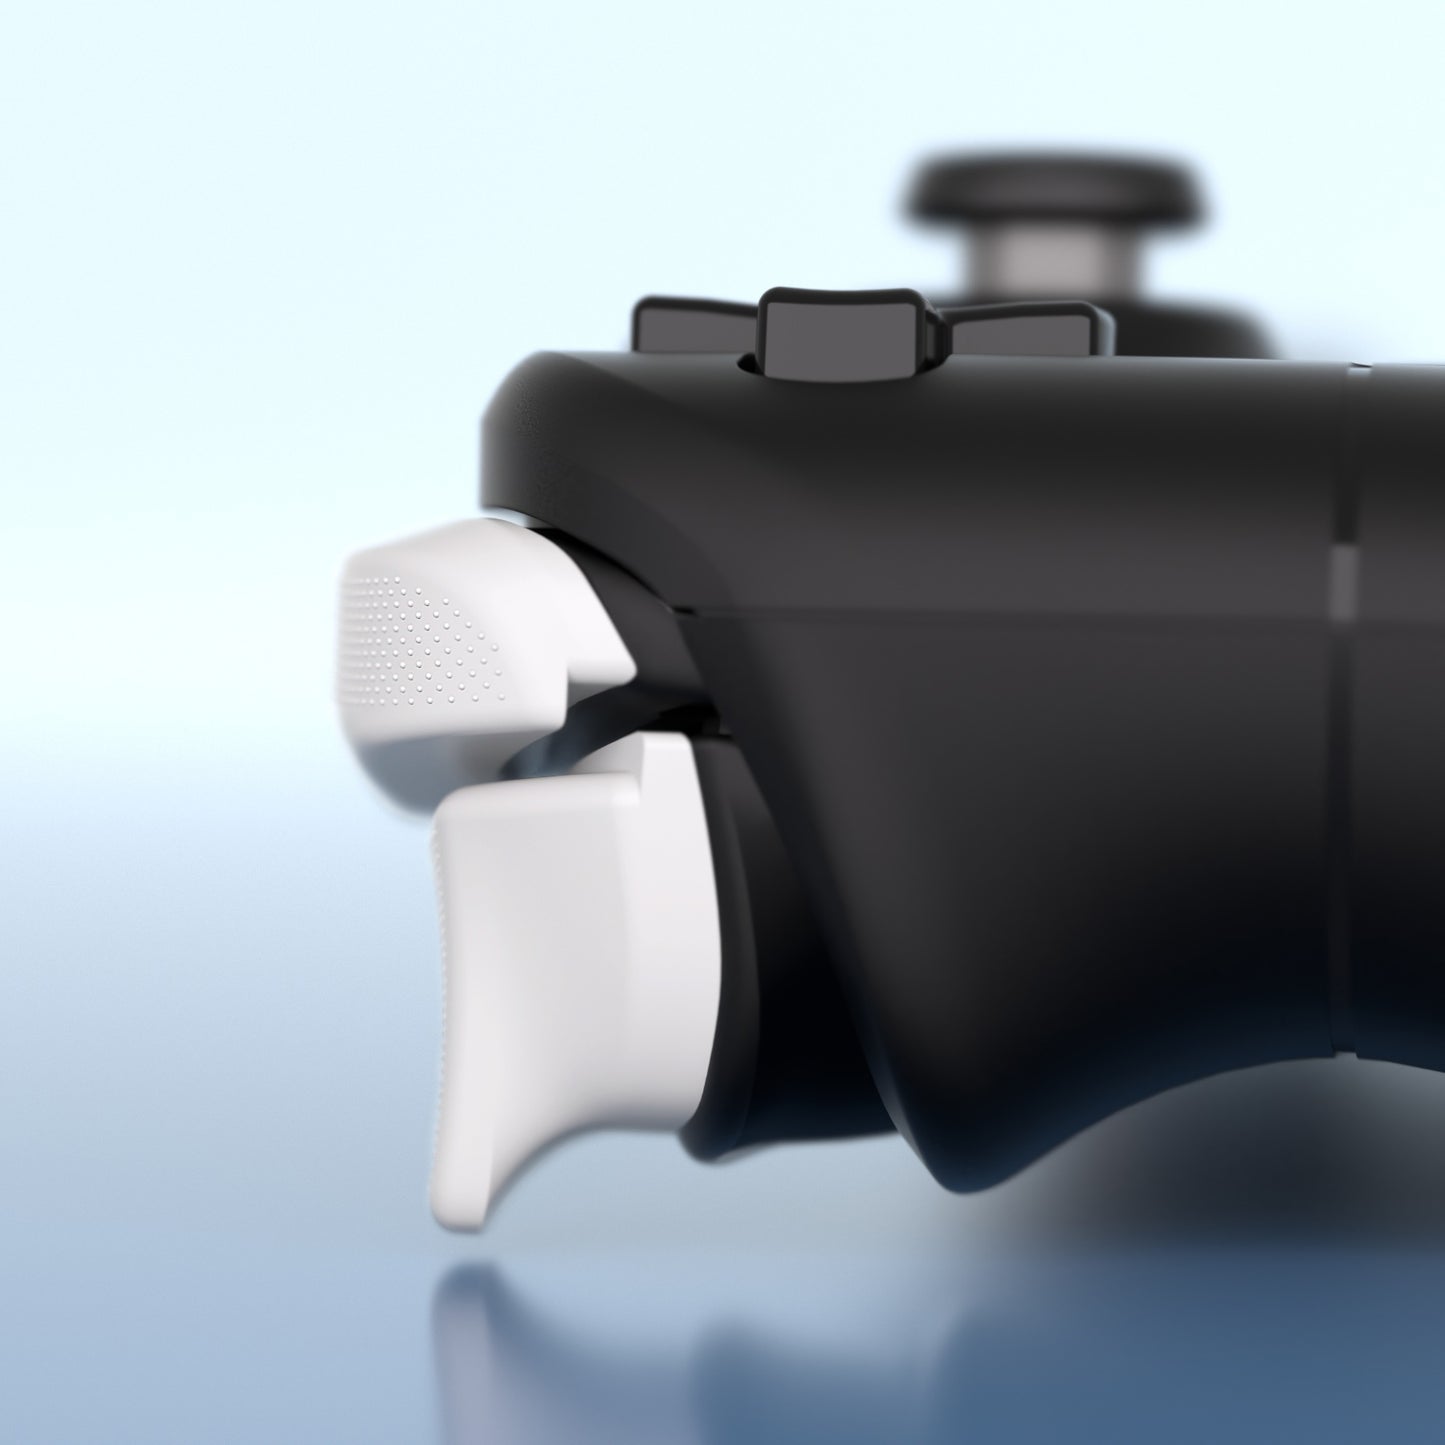 PlayVital LR INCREASER Shoulder Buttons Trigger Enhancement Set for Steam Deck - White - DJMSDJ002 PlayVital